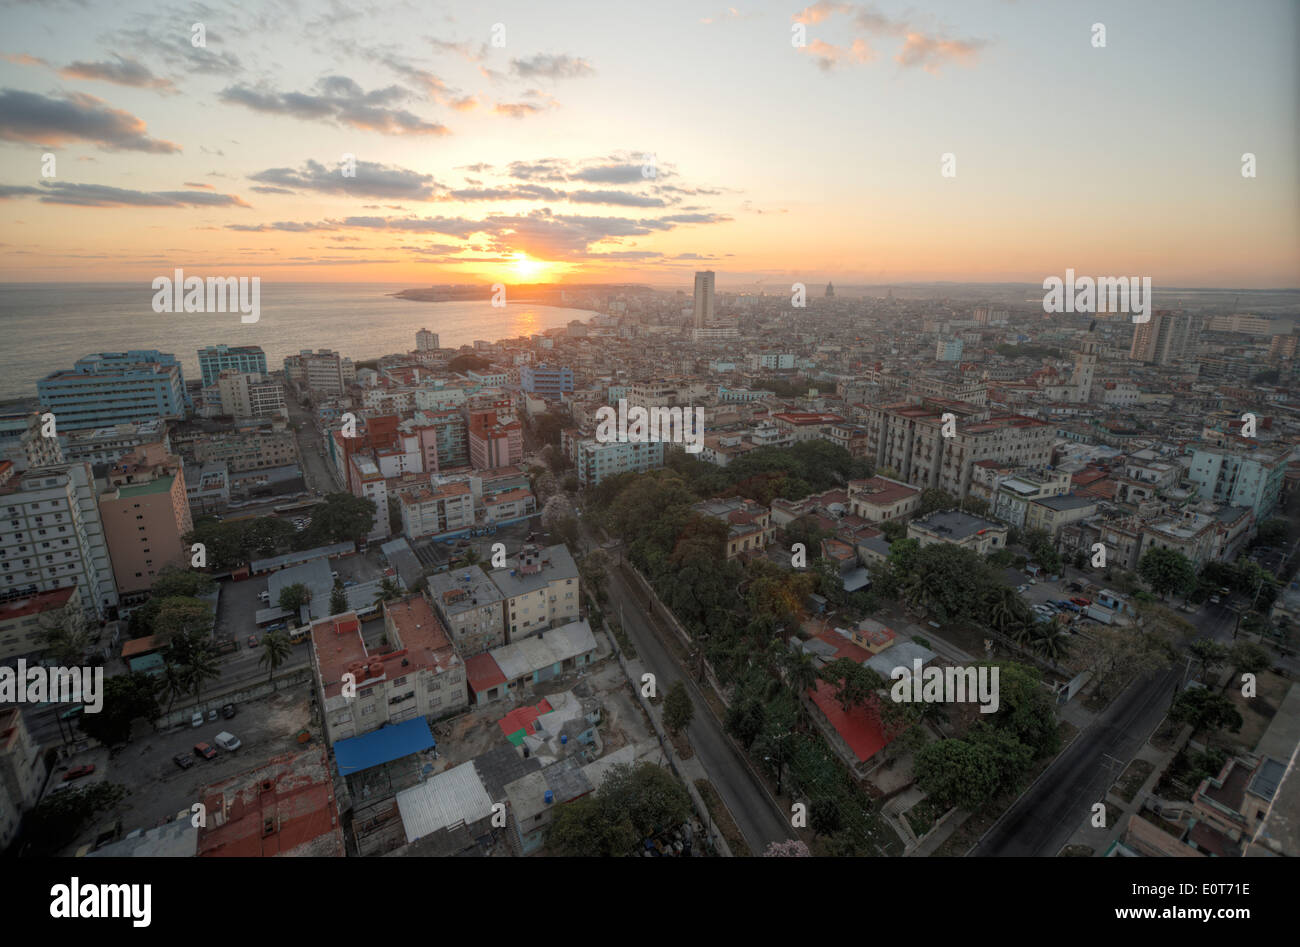 View of historic downtown of Havana, Cuba Stock Photo